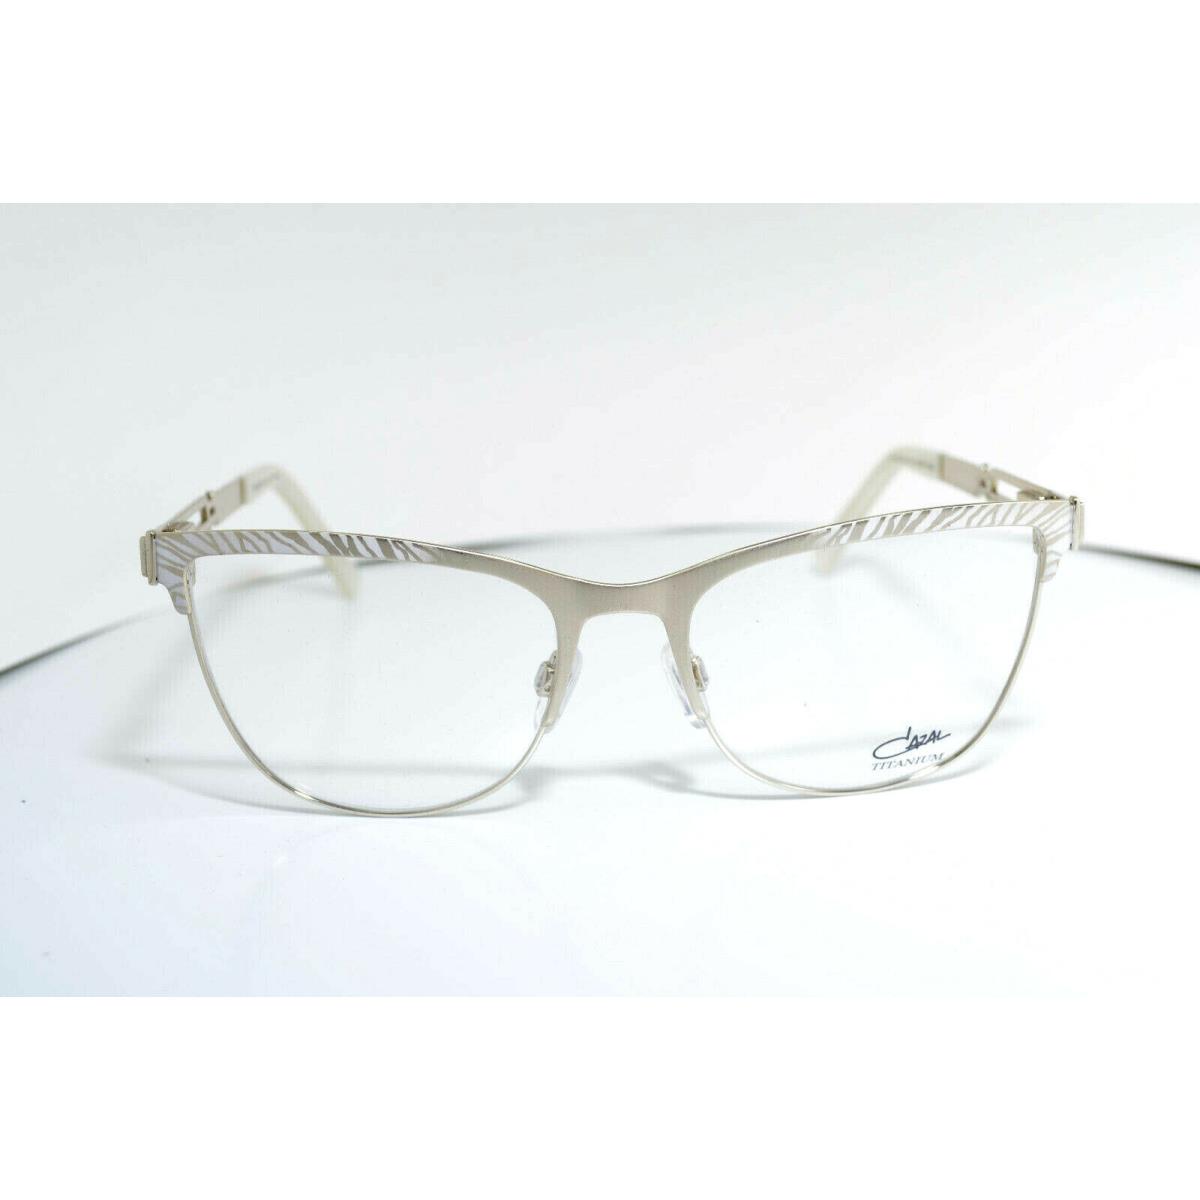 Cazal eyeglasses  - Multicolor Frame 0